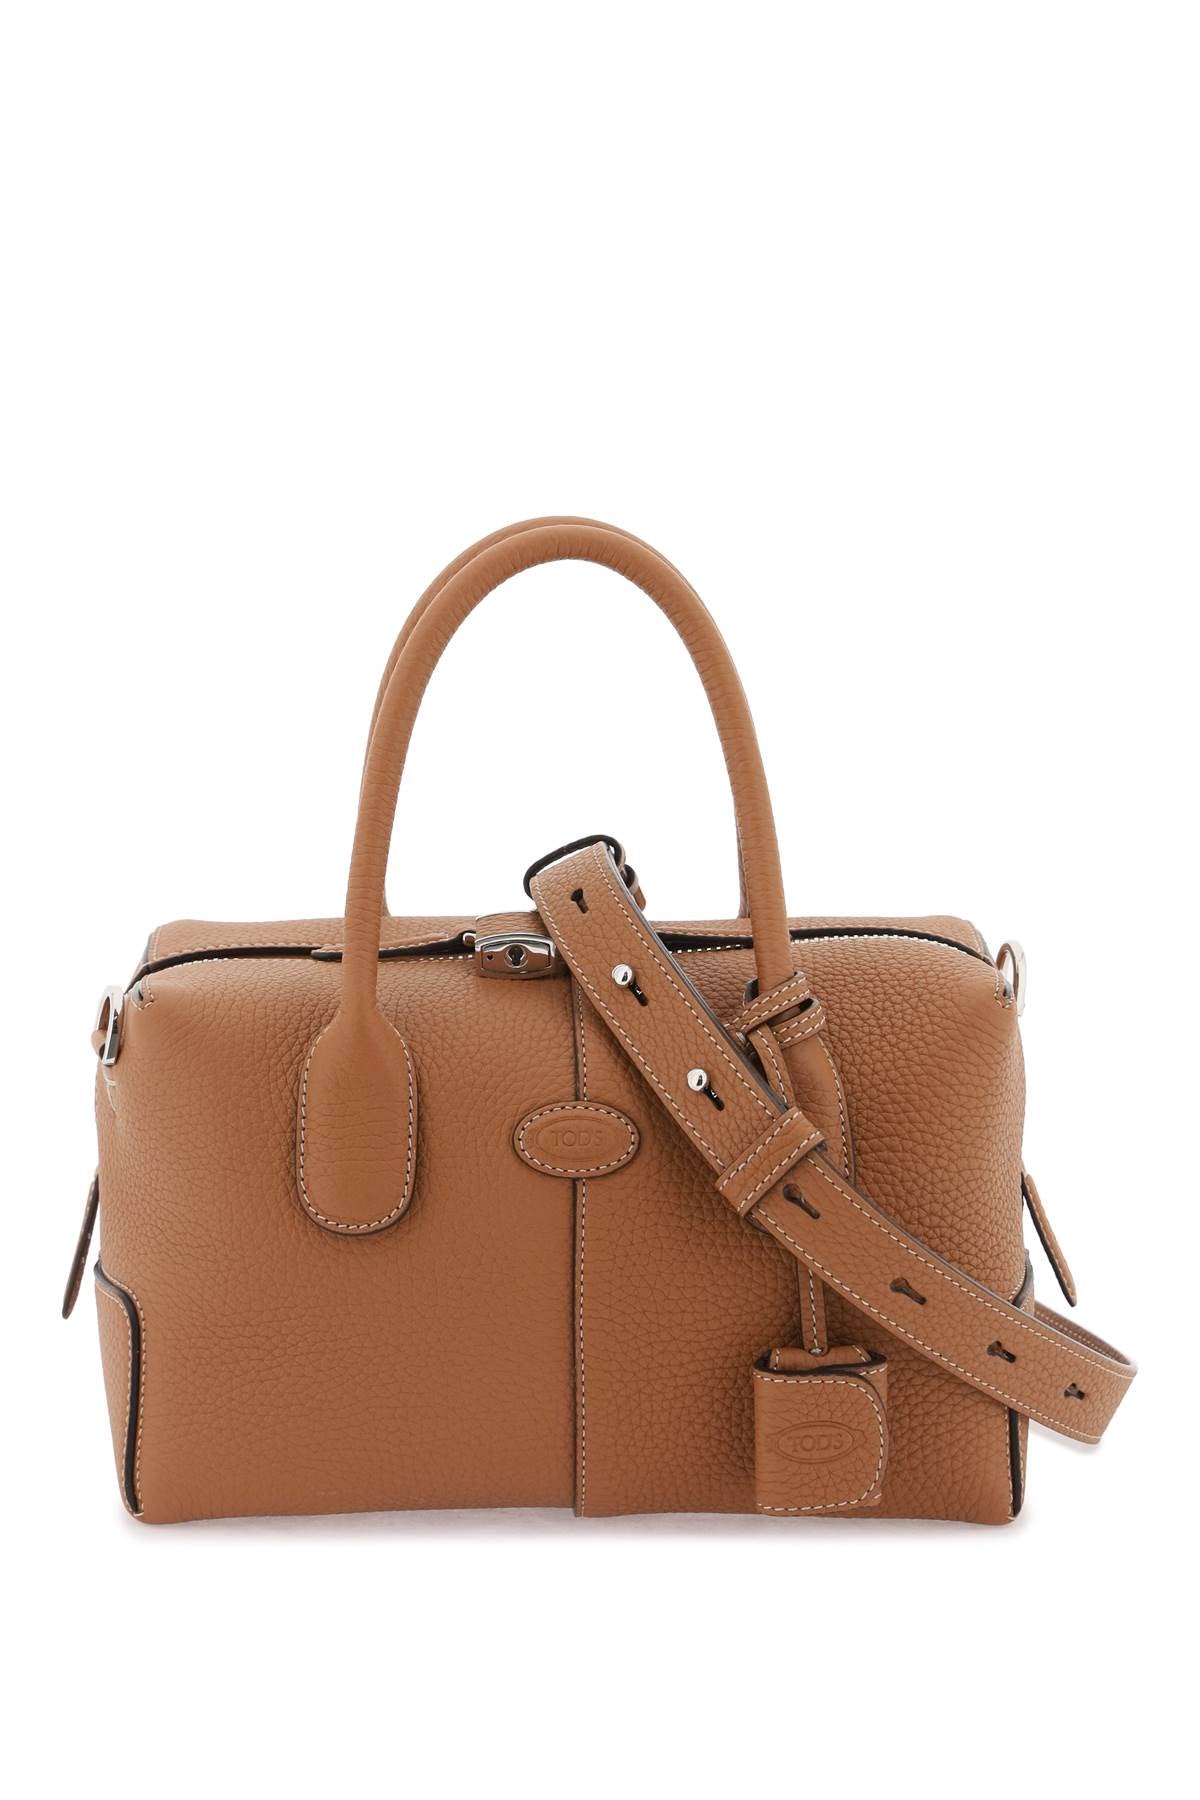 TOD'S Stylish Brown Leather Bauletto Handbag for Women